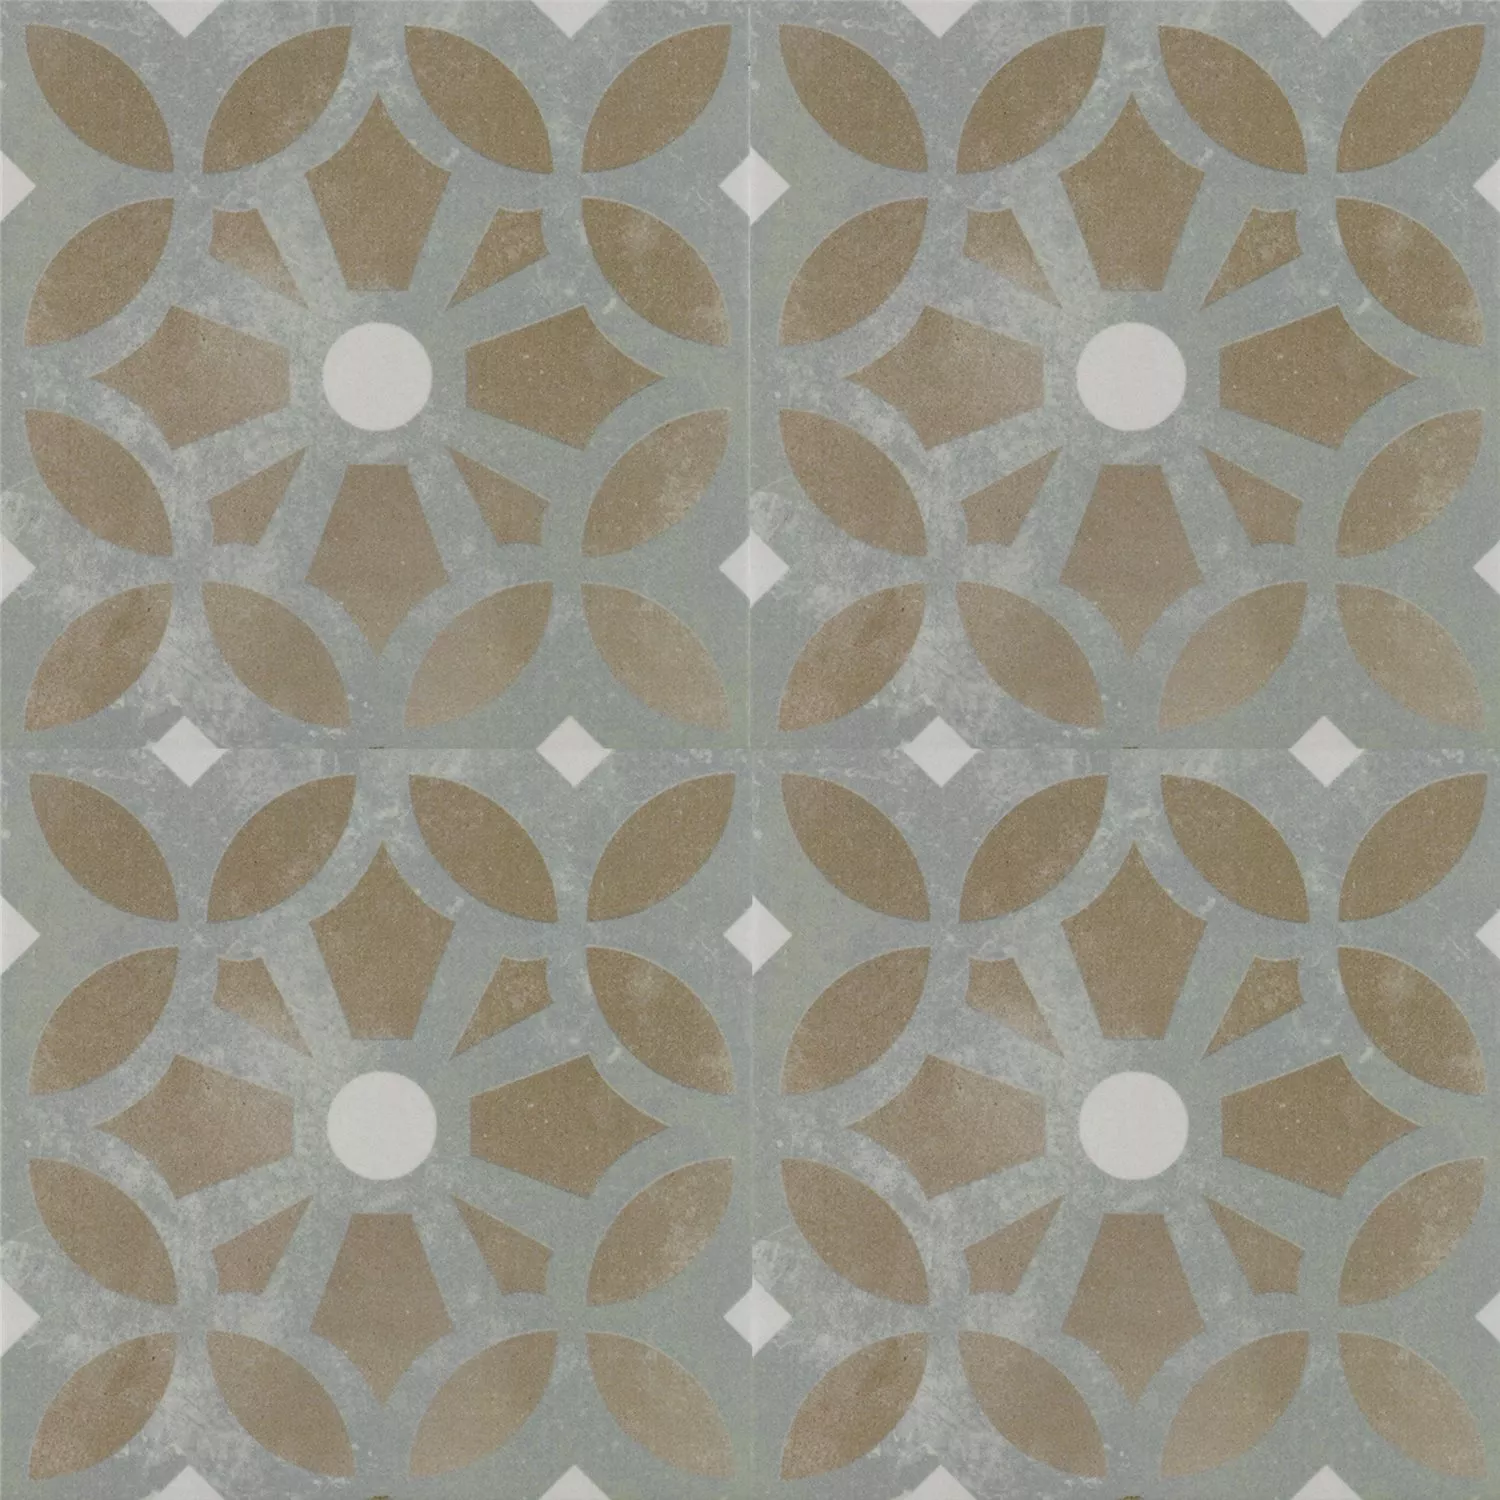 Sample Cement Tiles Optic Gotik Zara 22,3x22,3cm